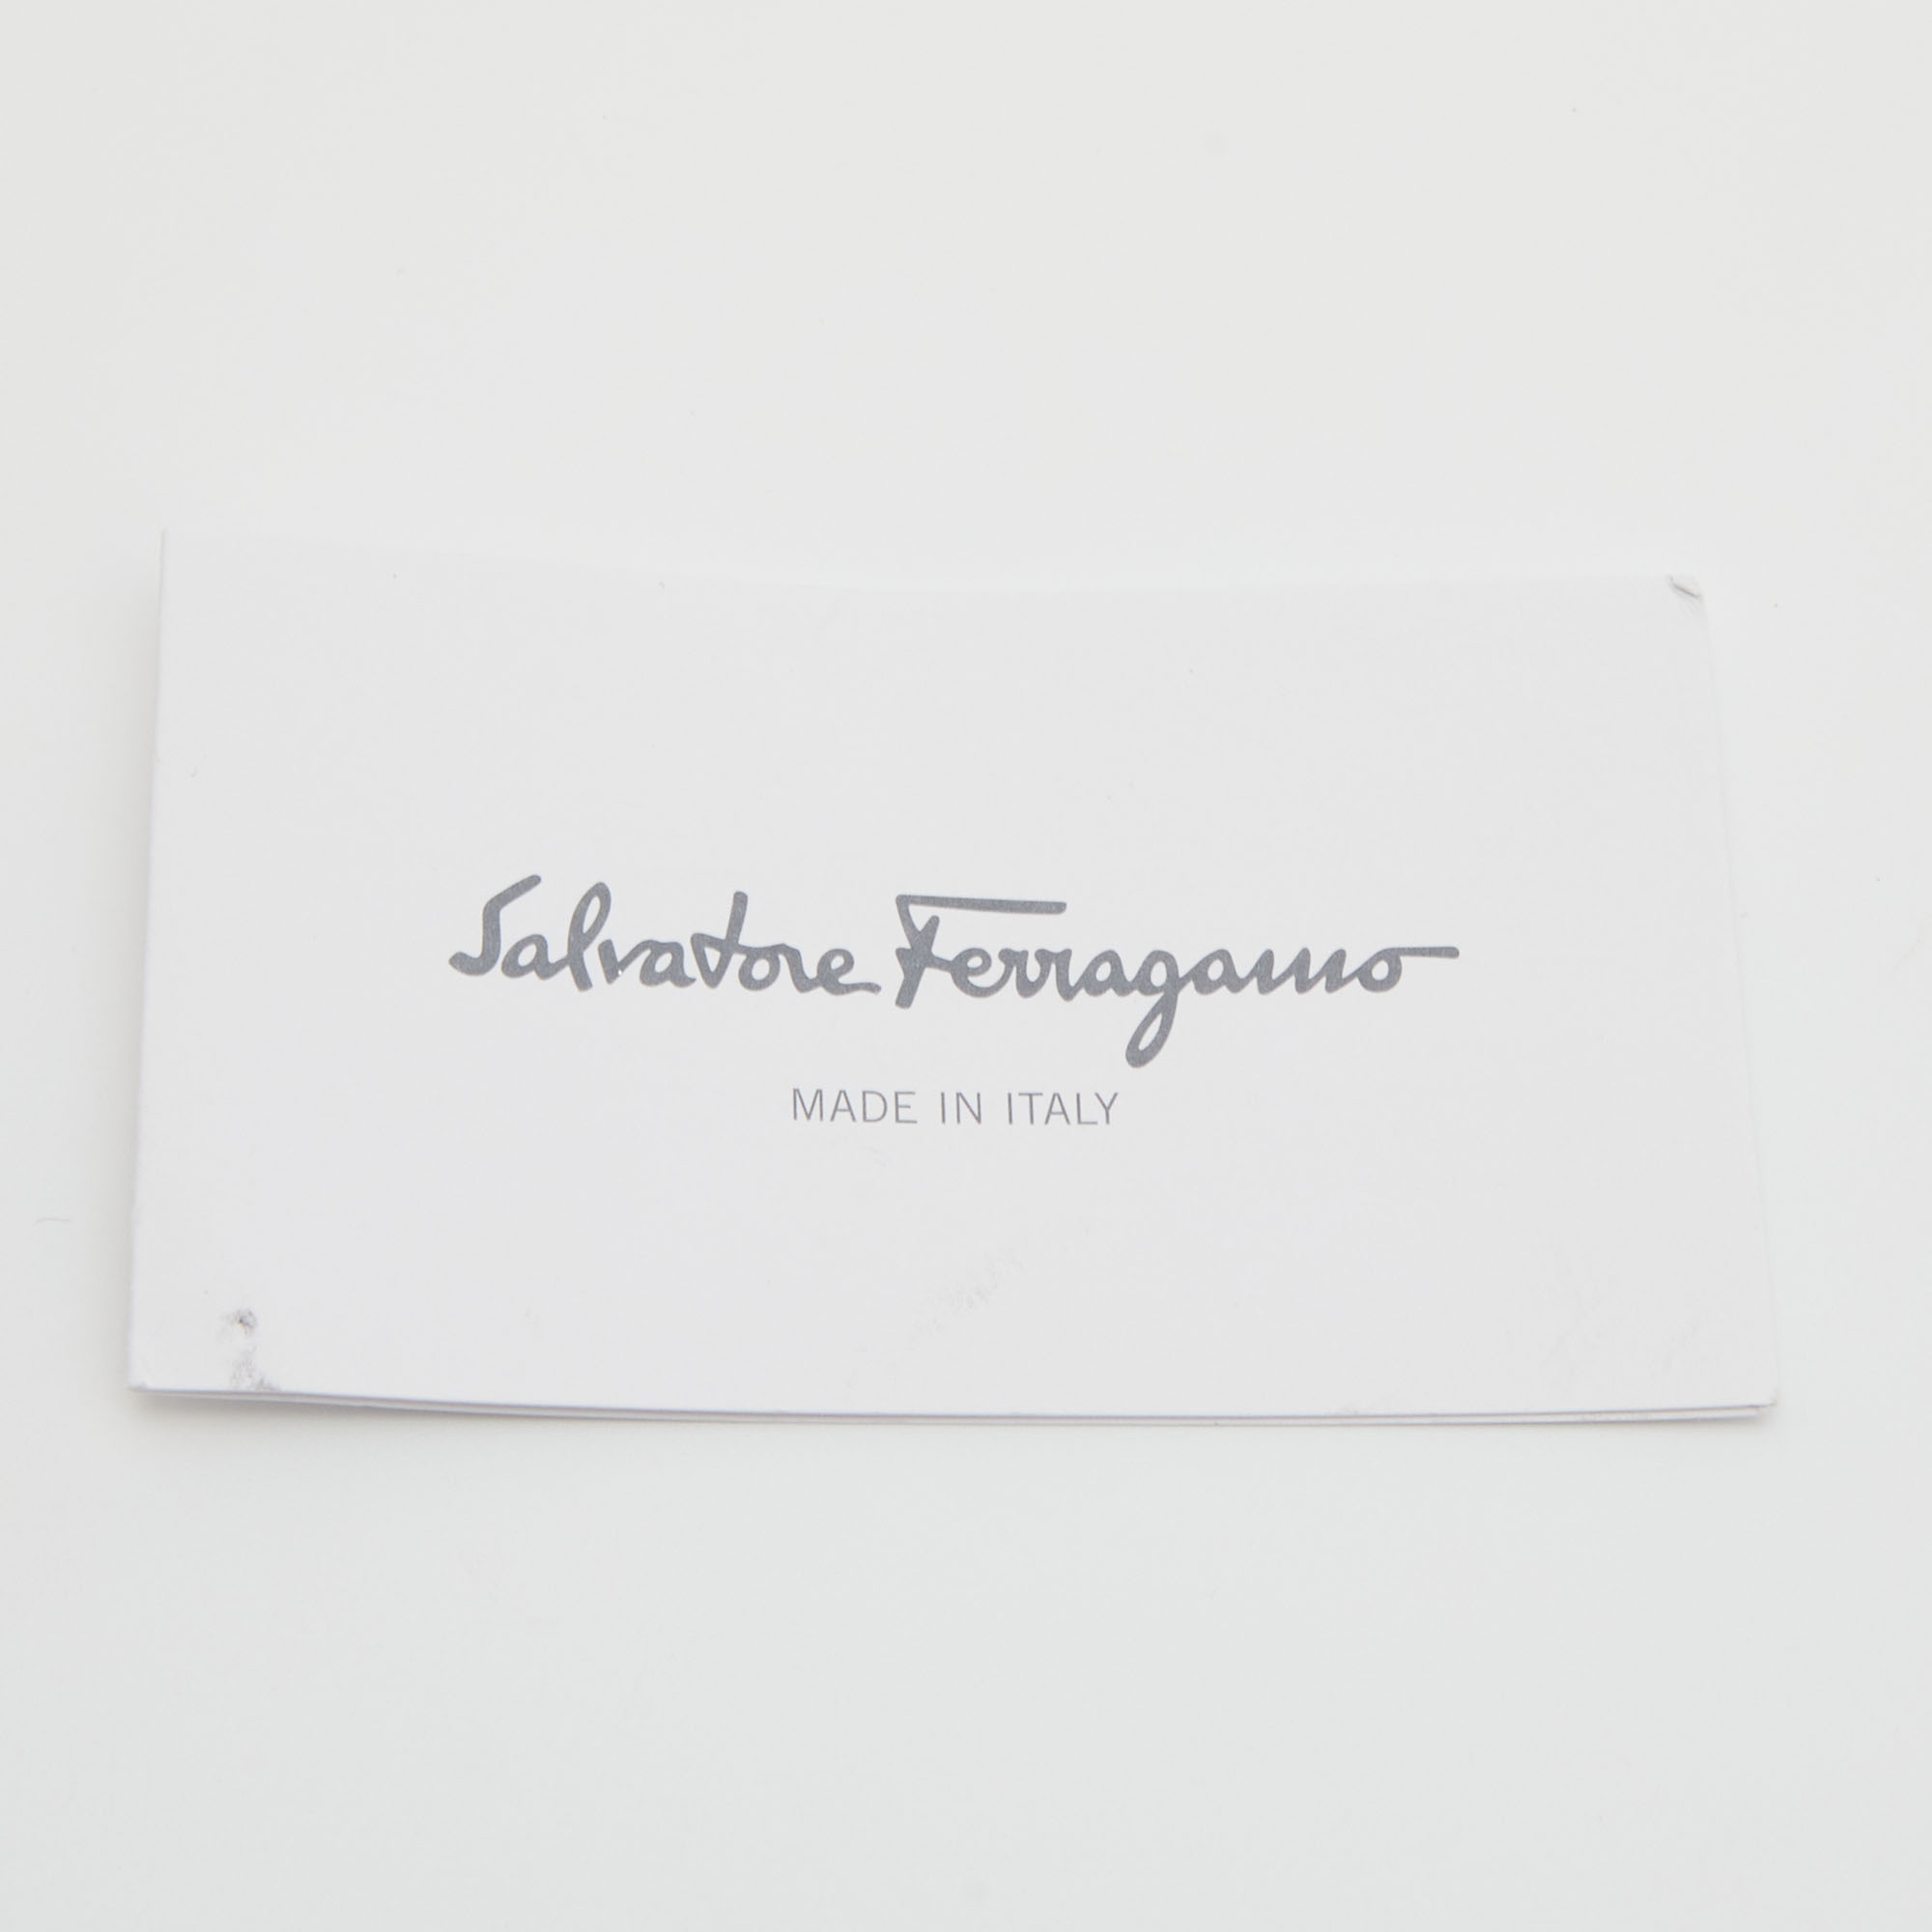 Salvatore Ferragamo Black Satin And Patent Leather Slingback Sandals Size 38